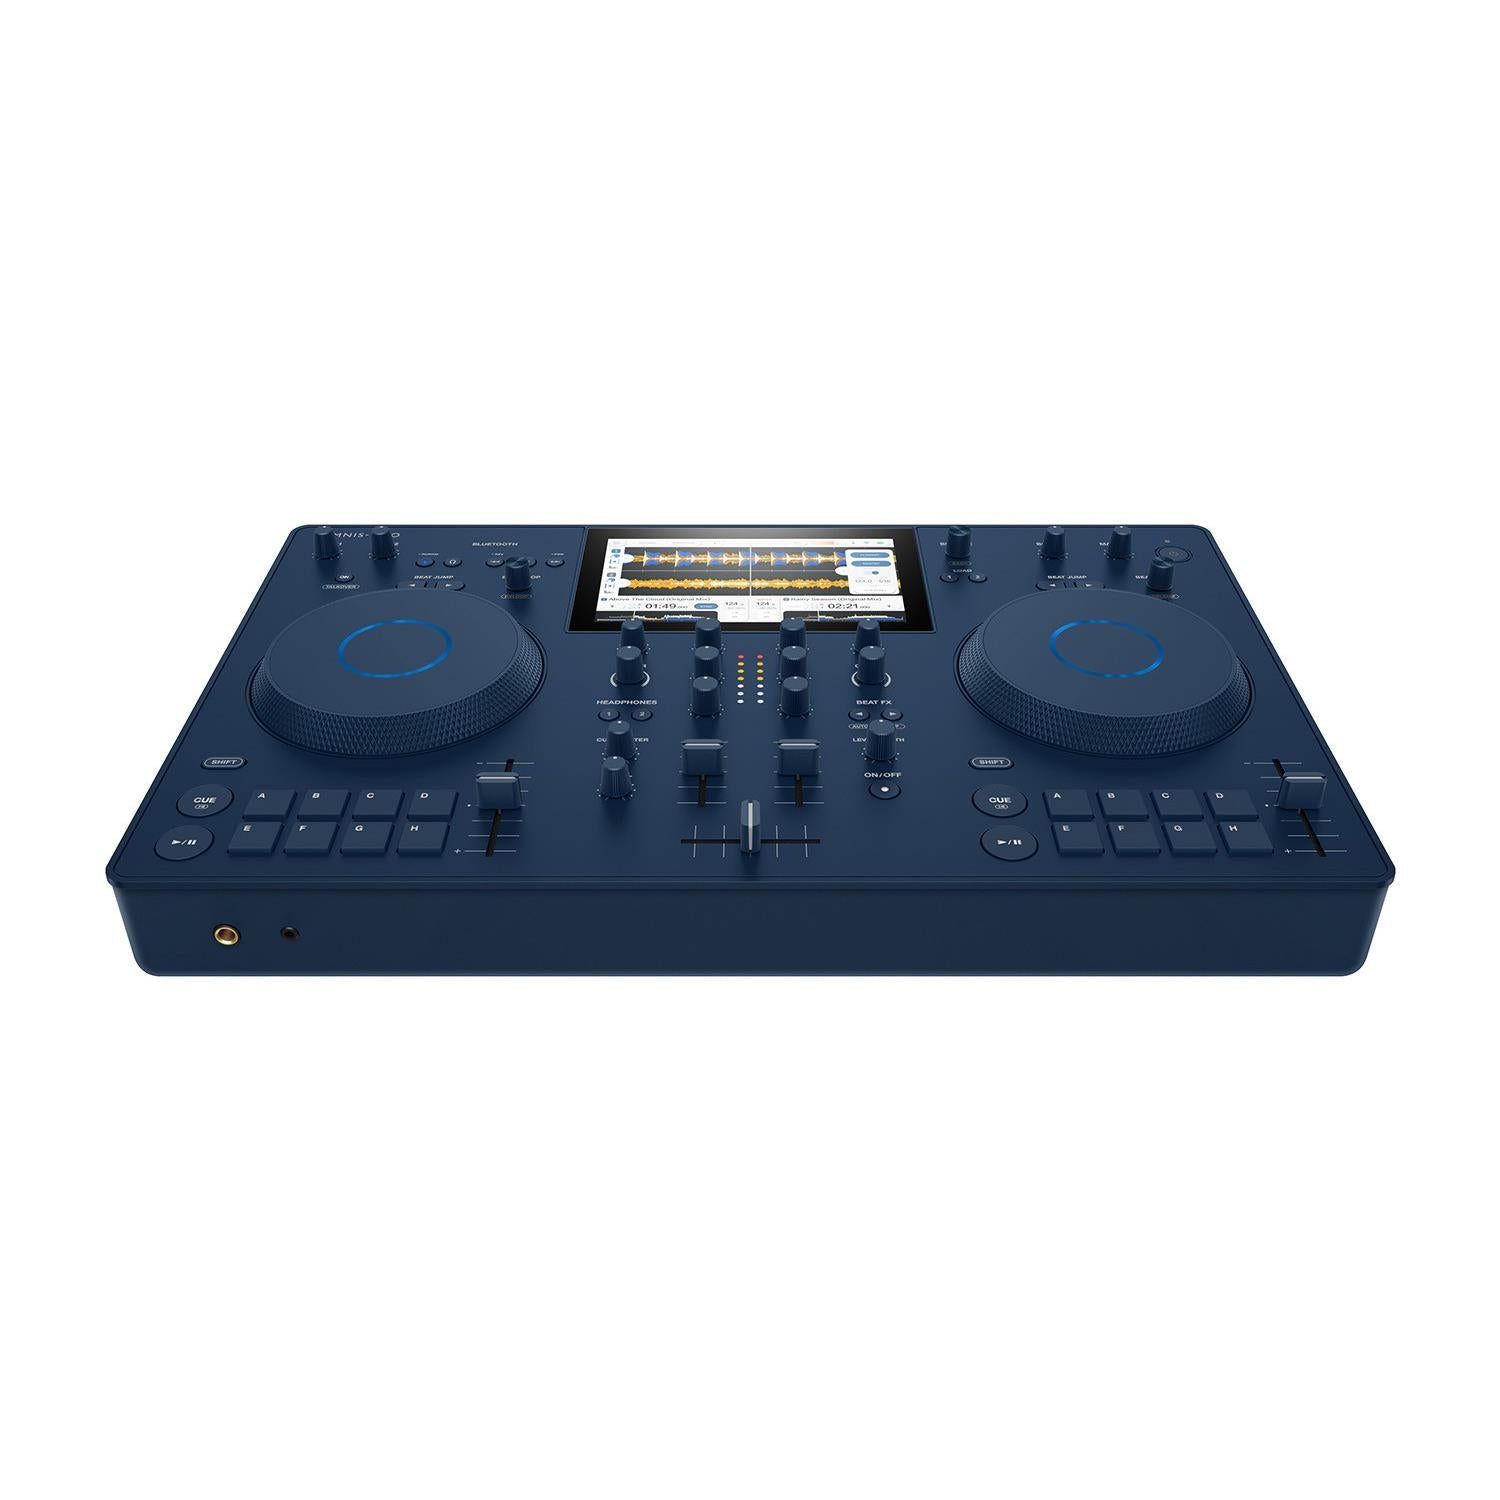 AlphaTheta Omnis-Duo Portable Battery Standalone DJ Controller